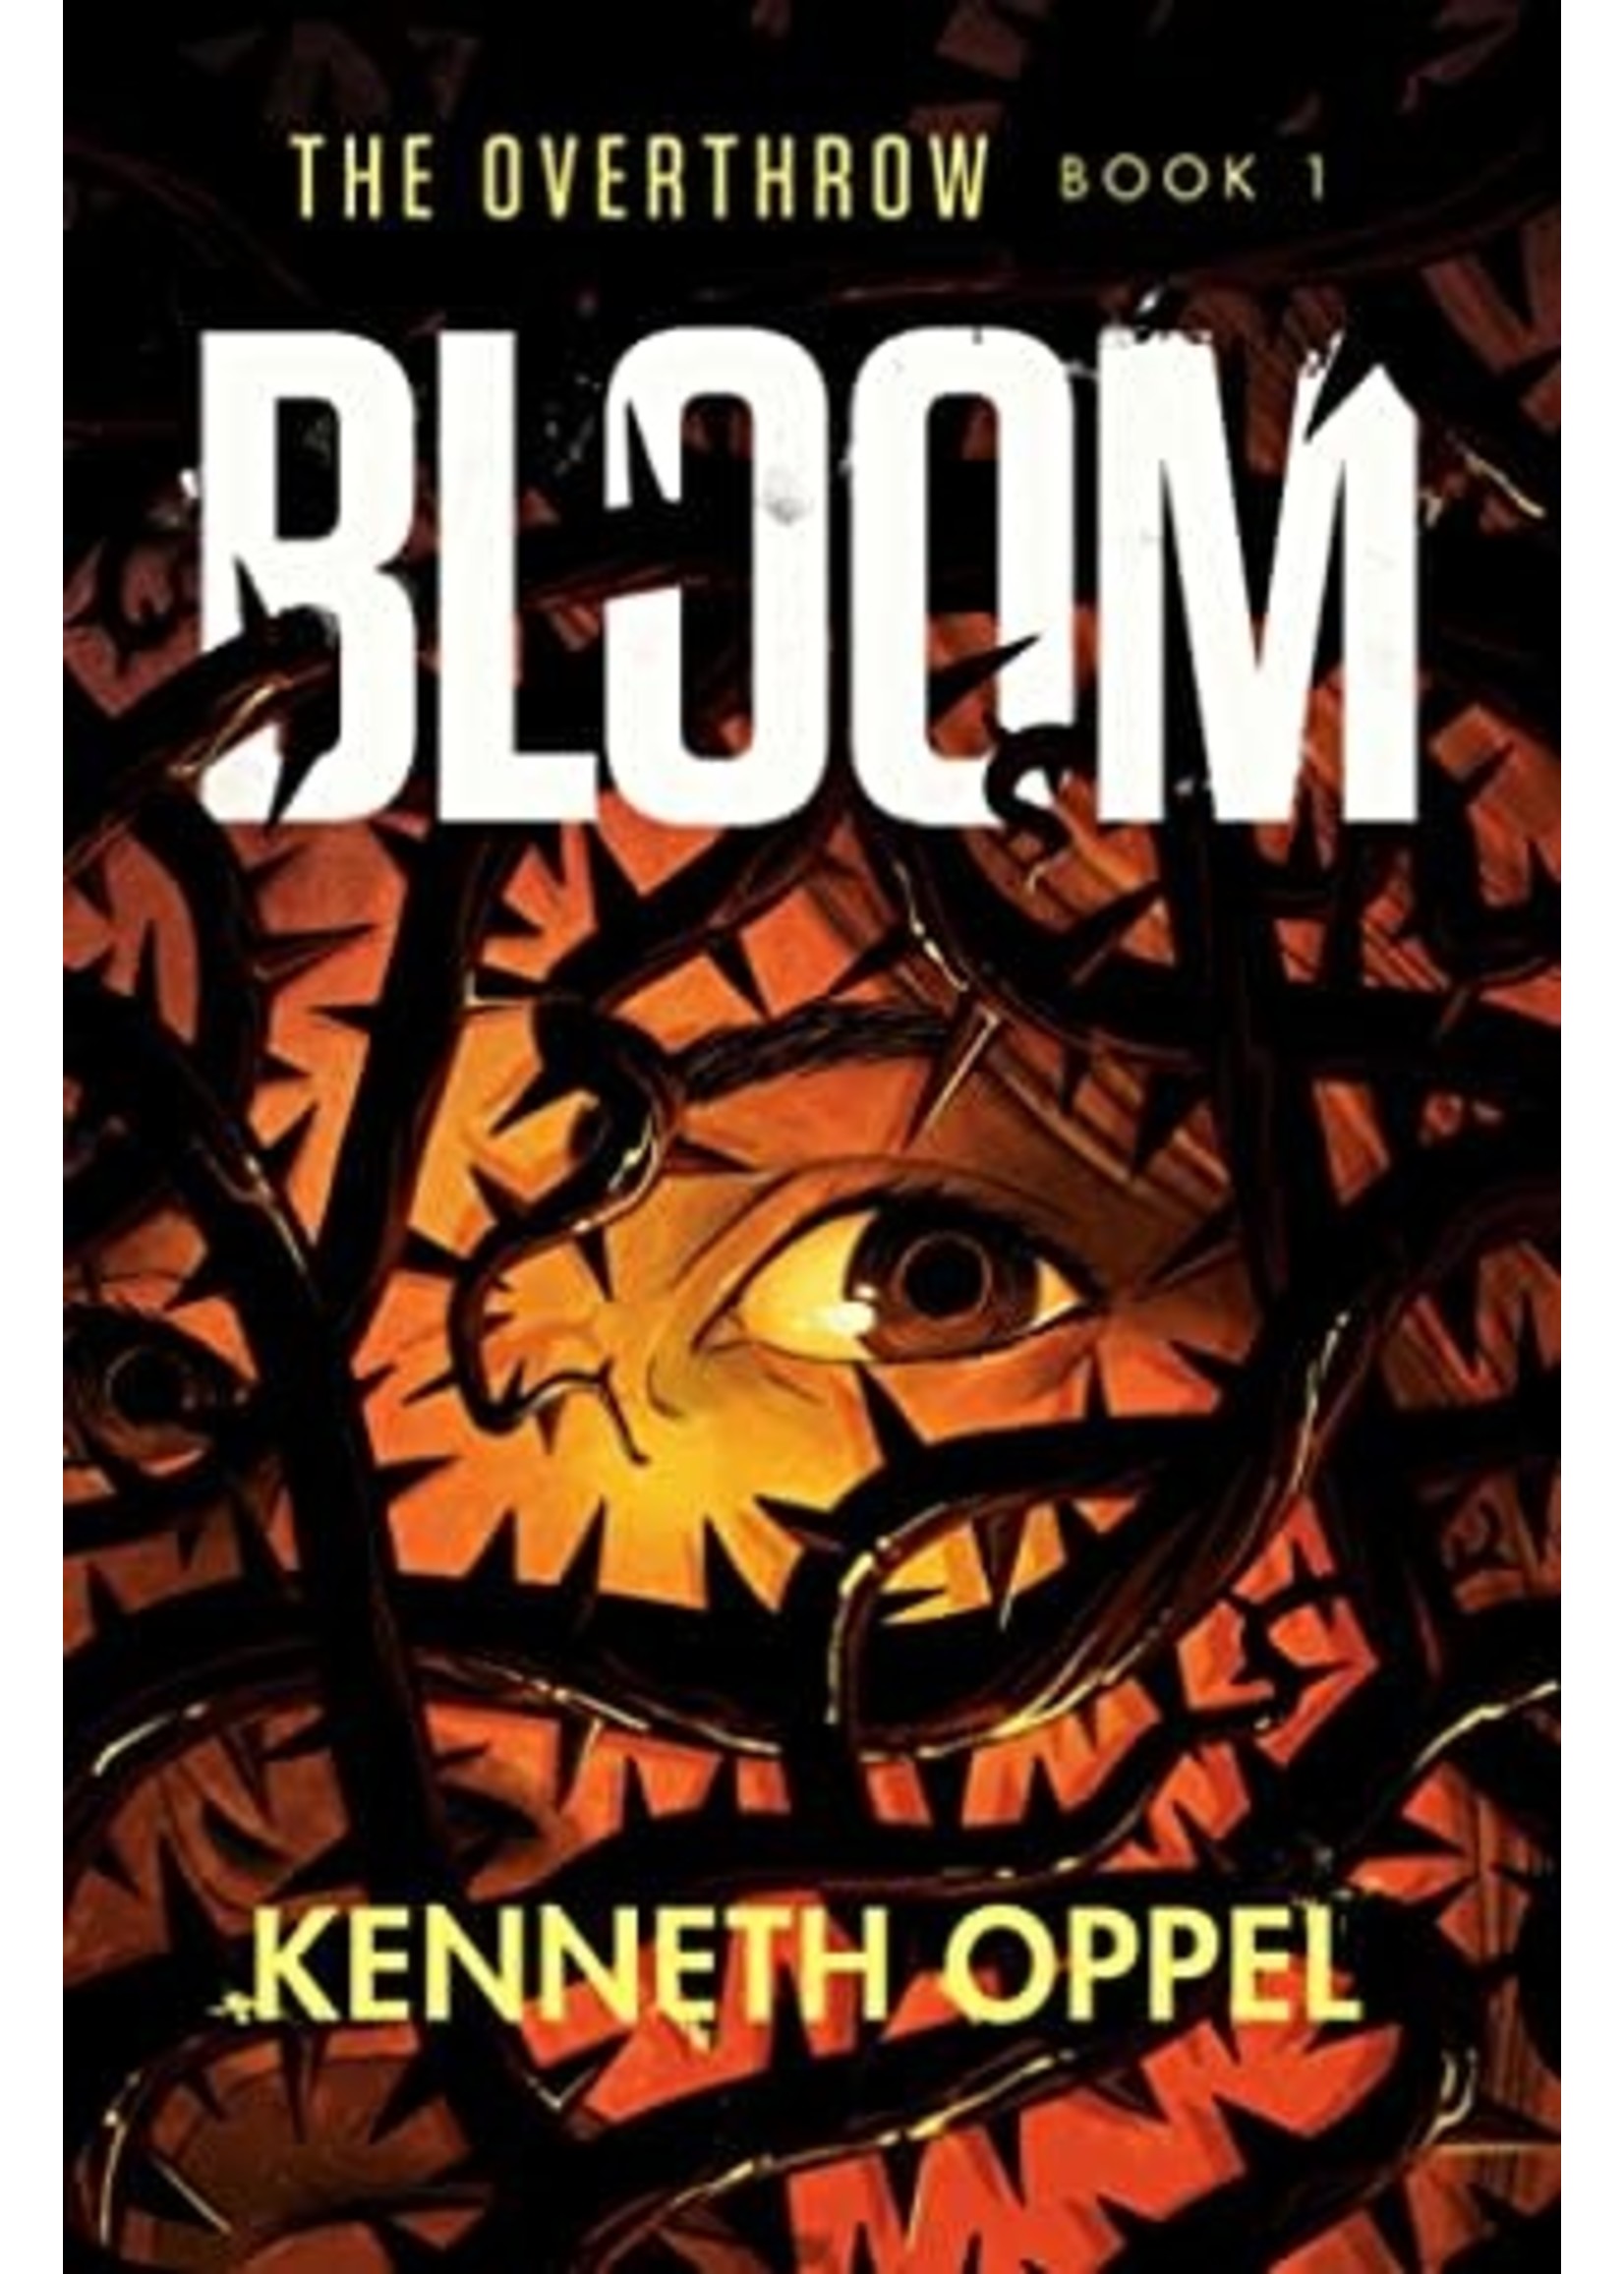 Bloom (Bloom #1) by Kenneth Oppel